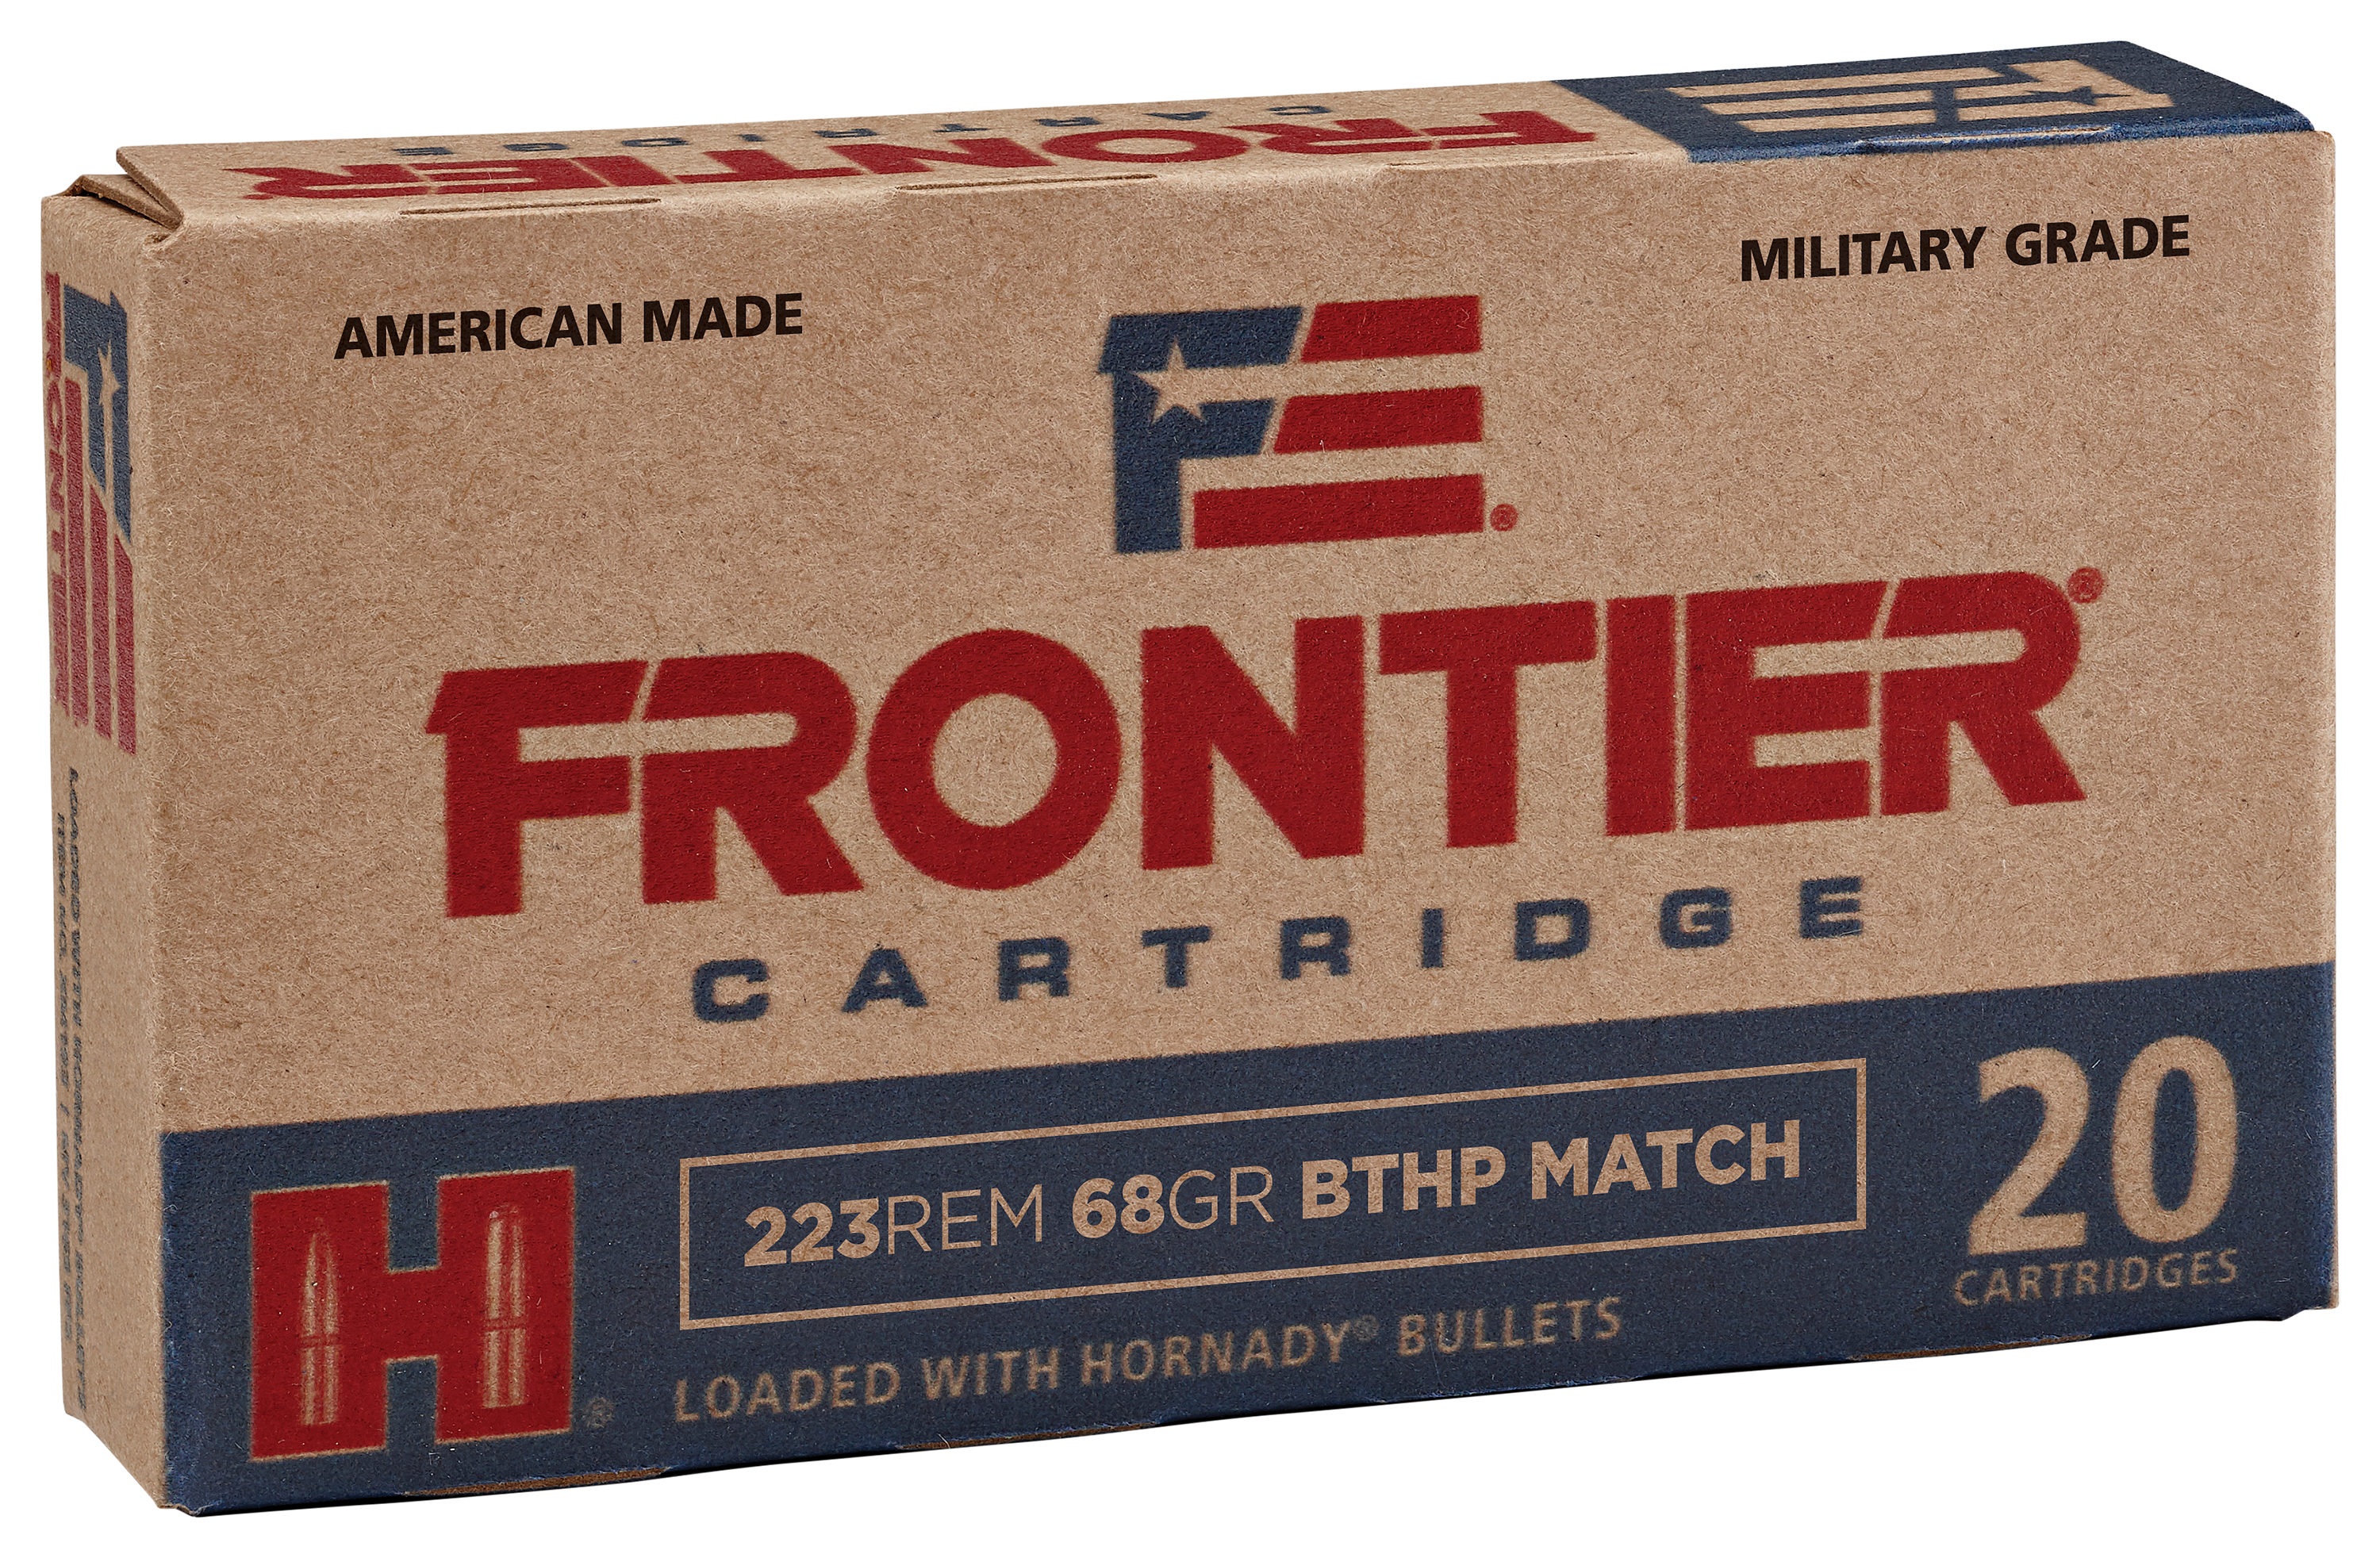 Frontier .223 Rem 68 Grain Centerfire Rifle Ammo